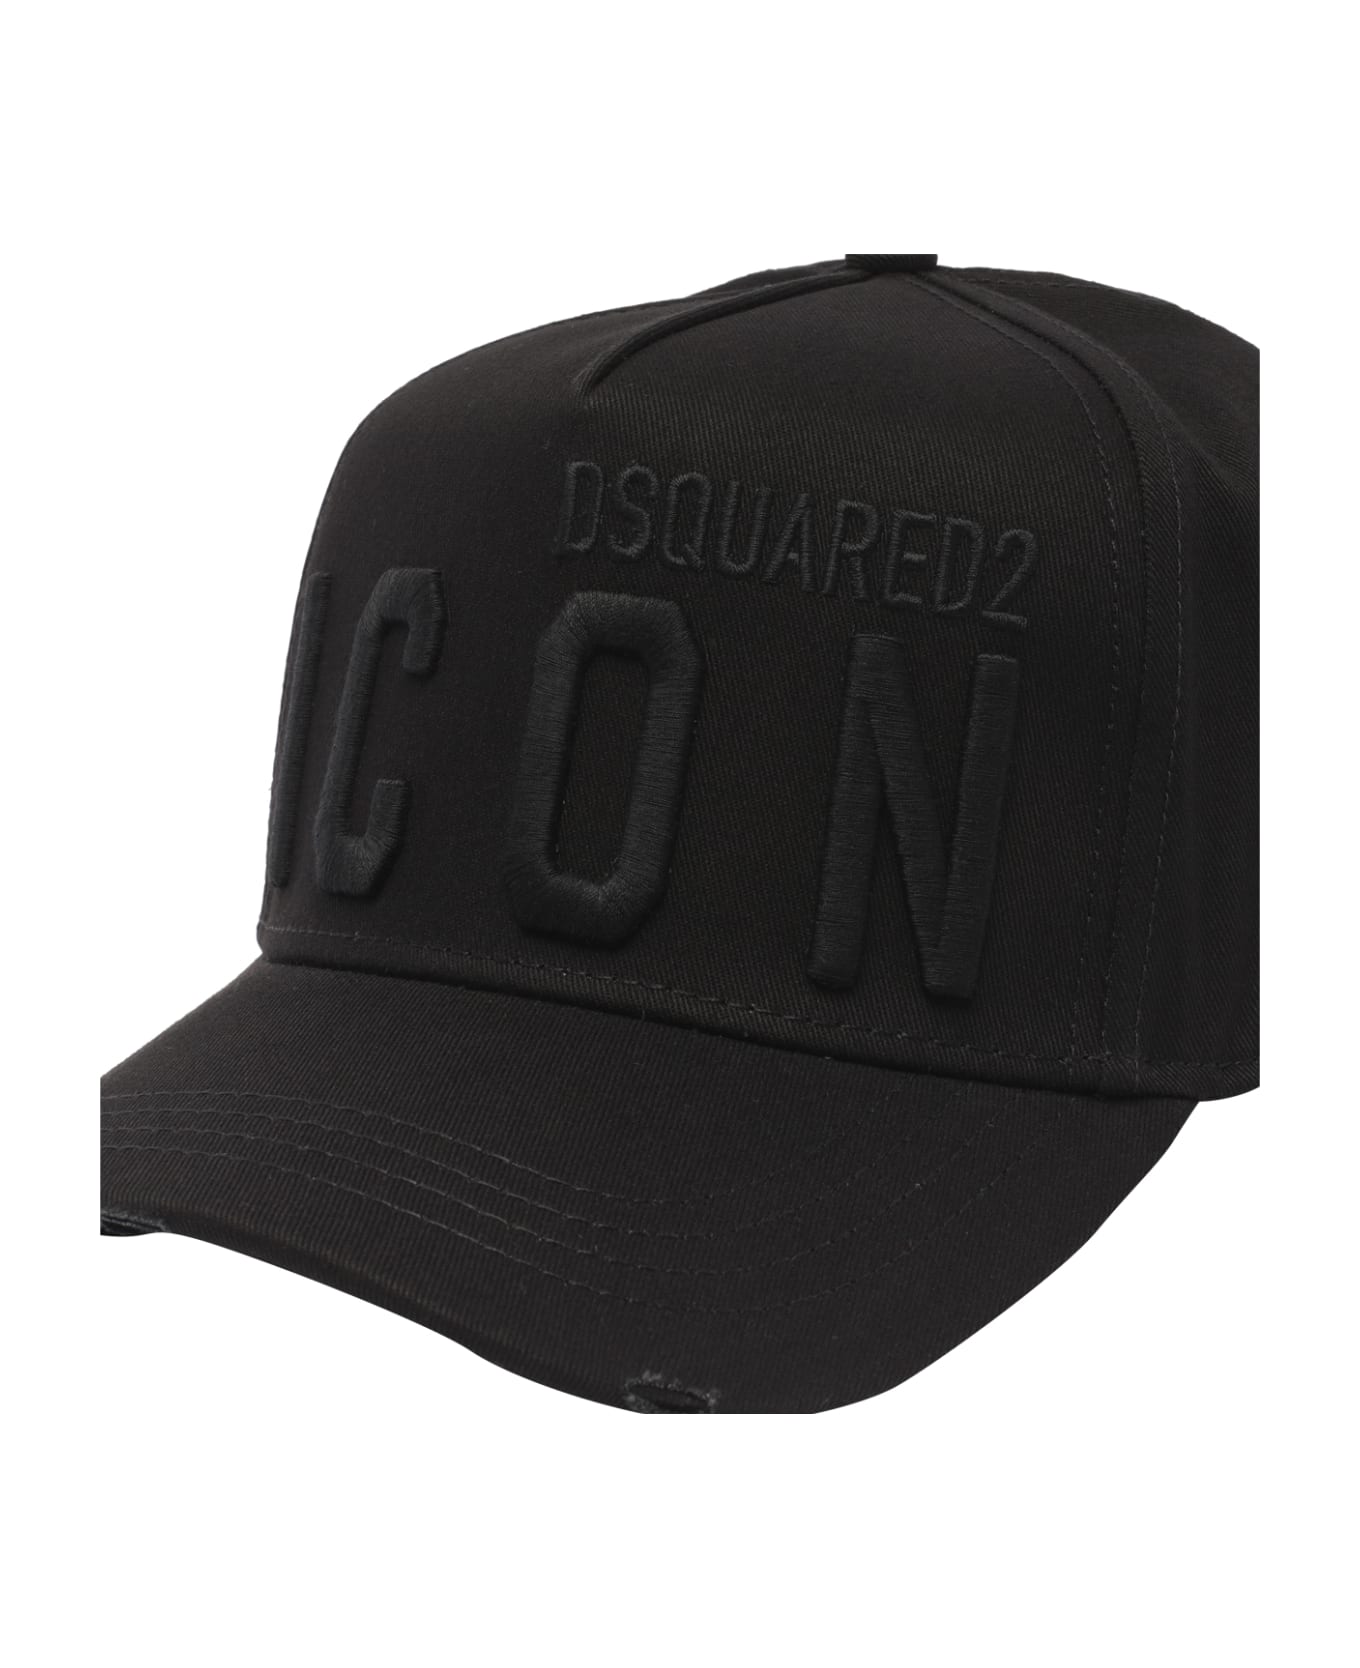 Dsquared2 Be Icon Baseball Cap - Black